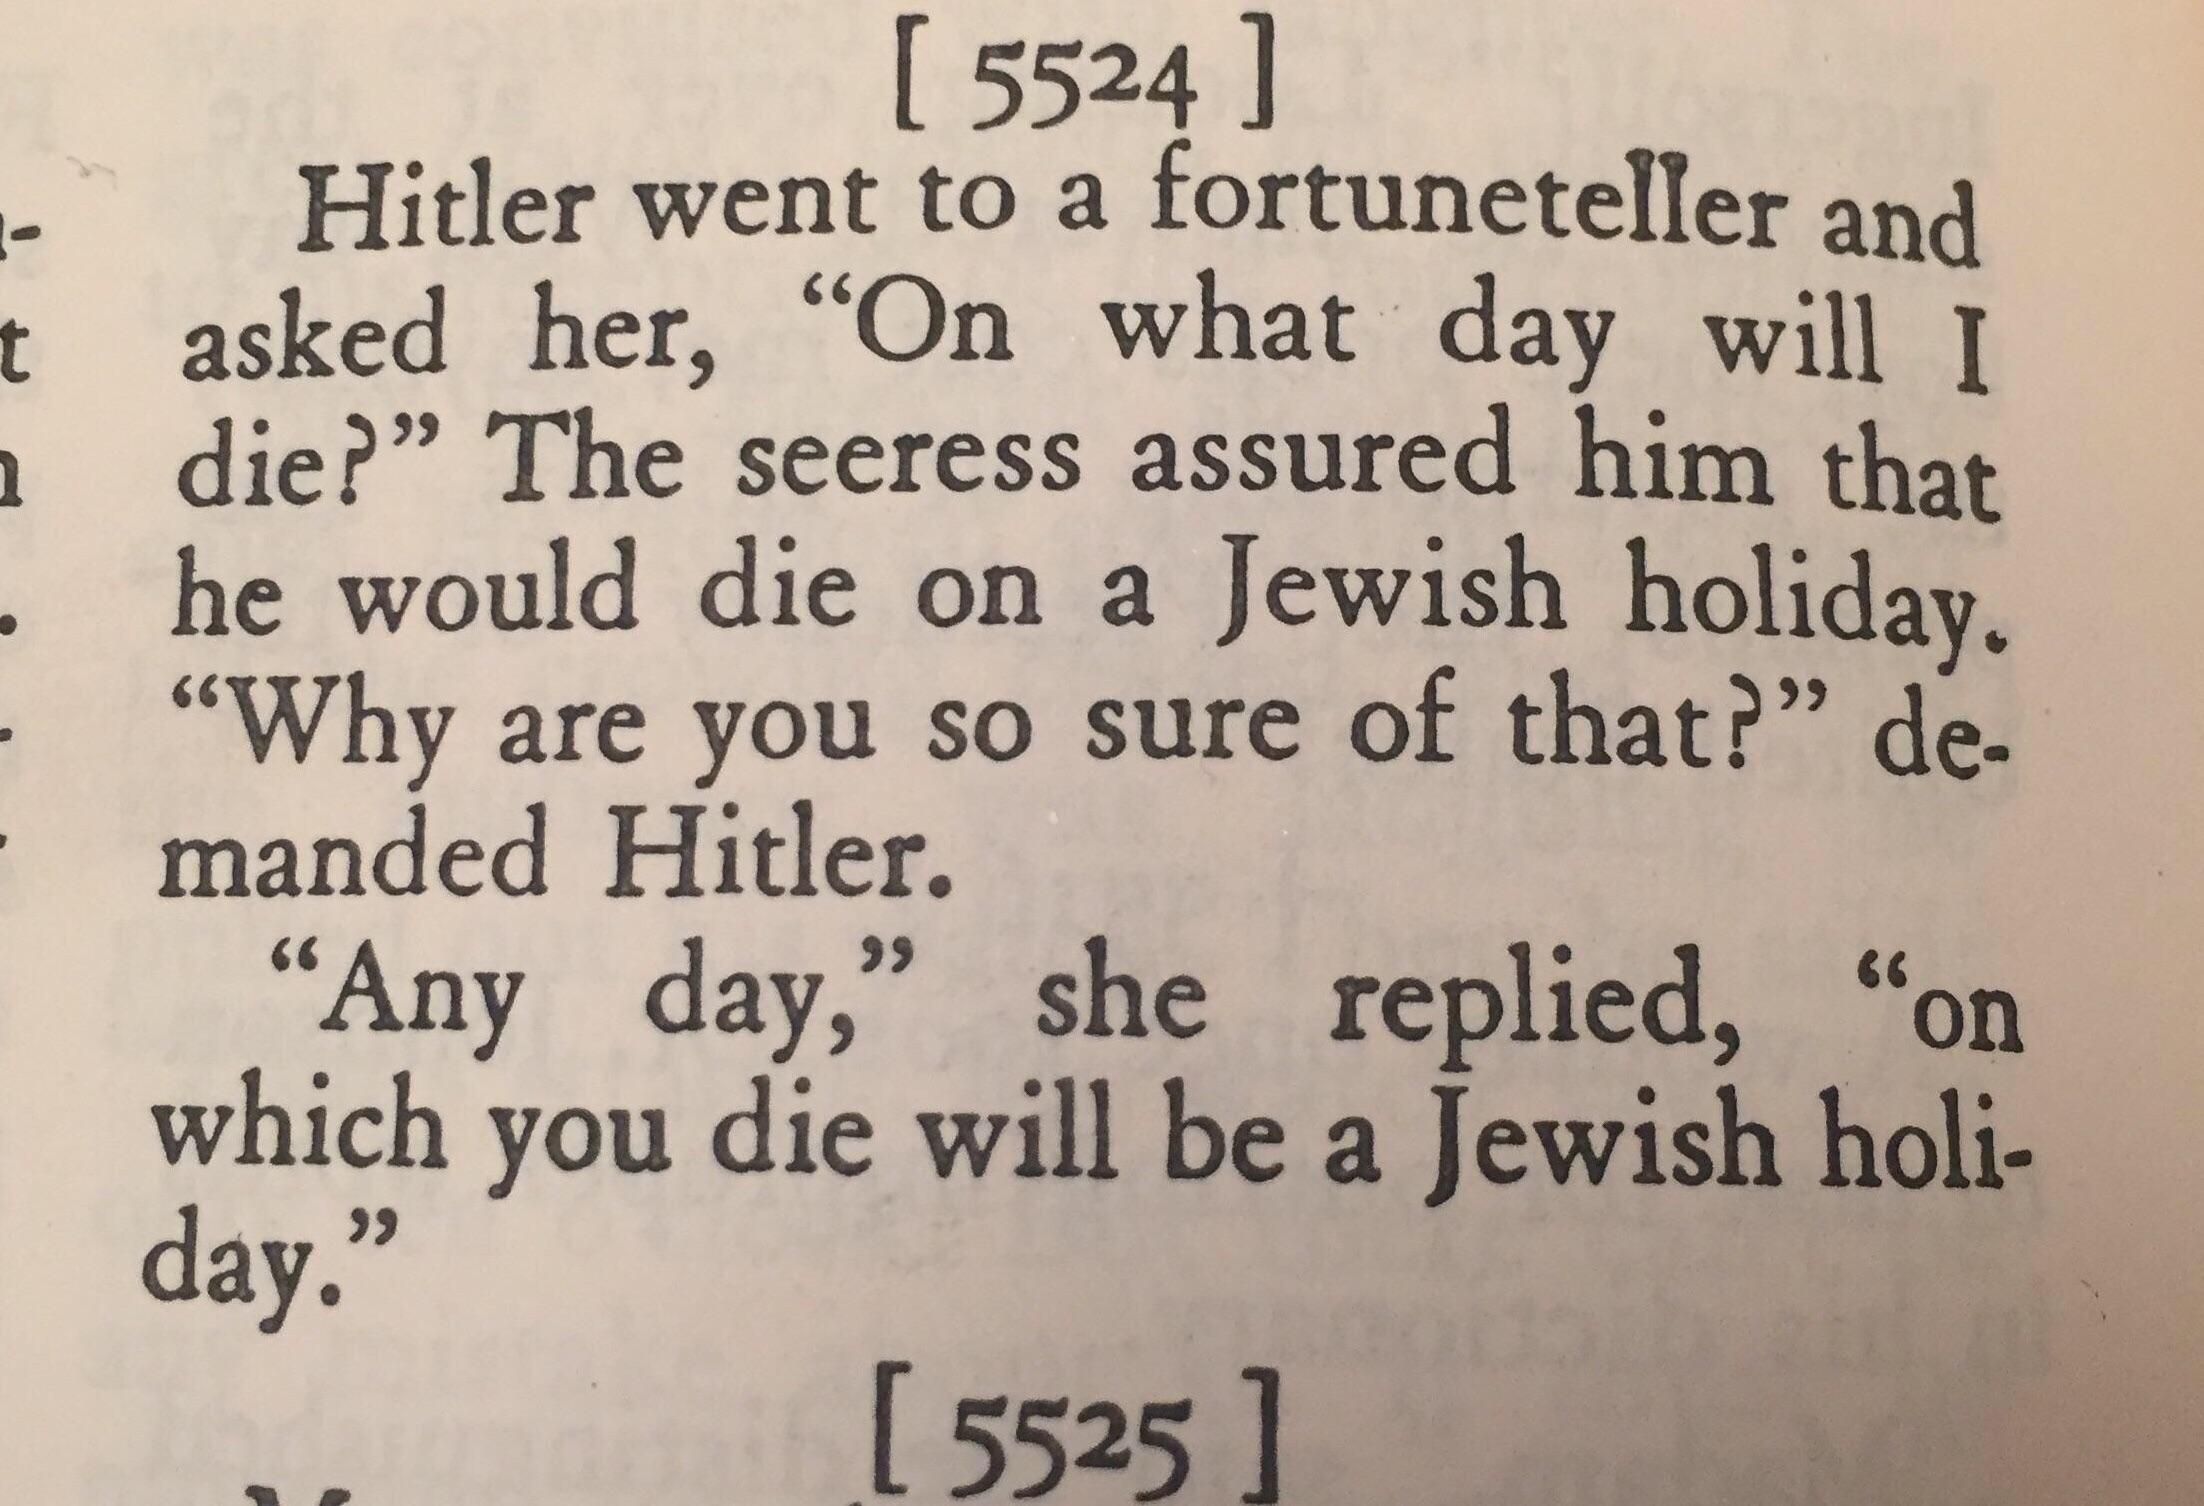 Hitler joke from a 1940s joke book